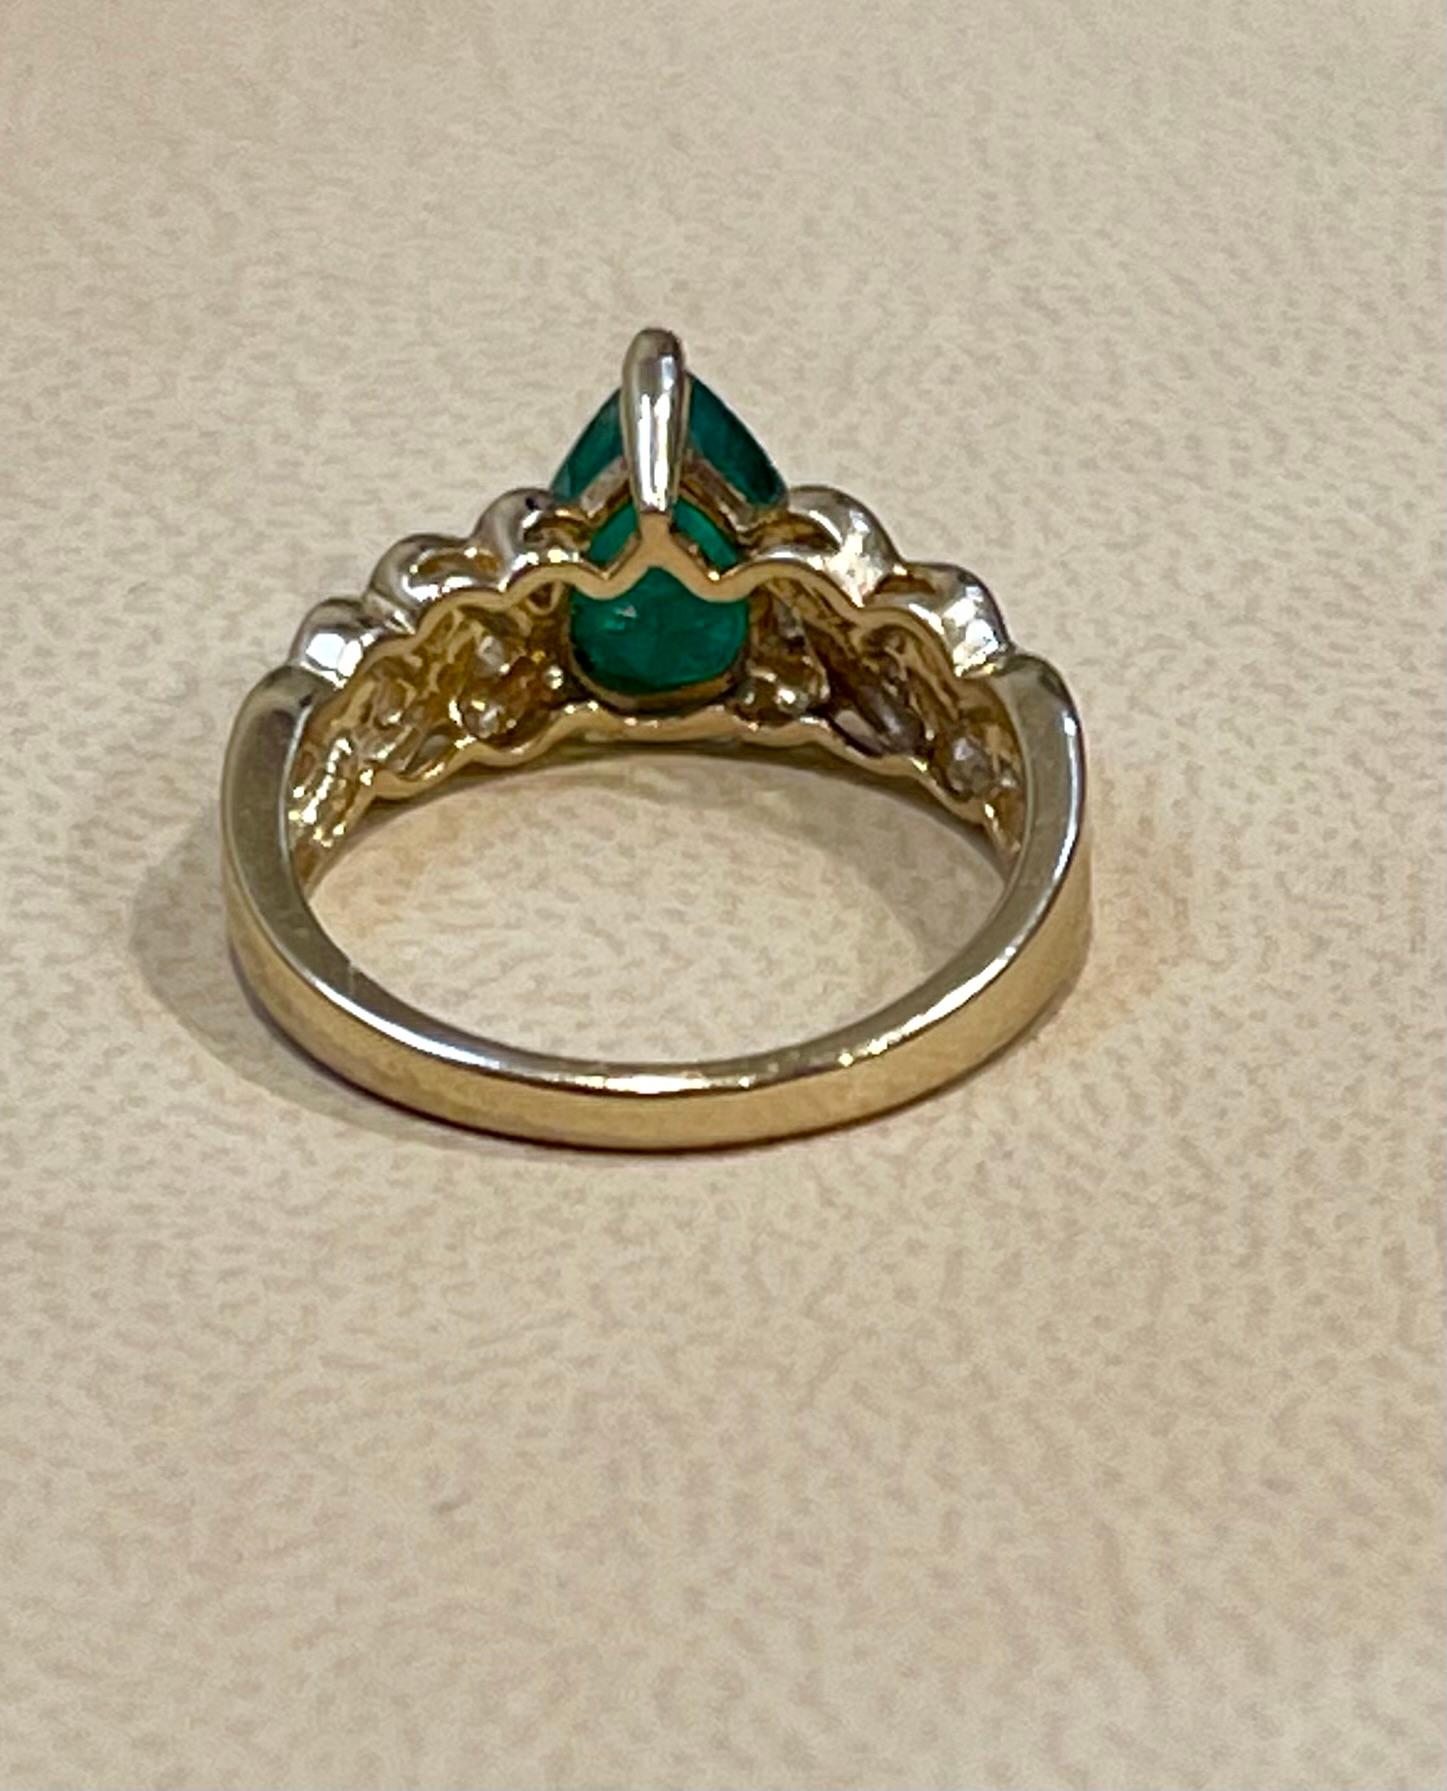 1.42 Carat Pear Cut Natural Emerald Ring 14 Karat Yellow Gold For Sale 2